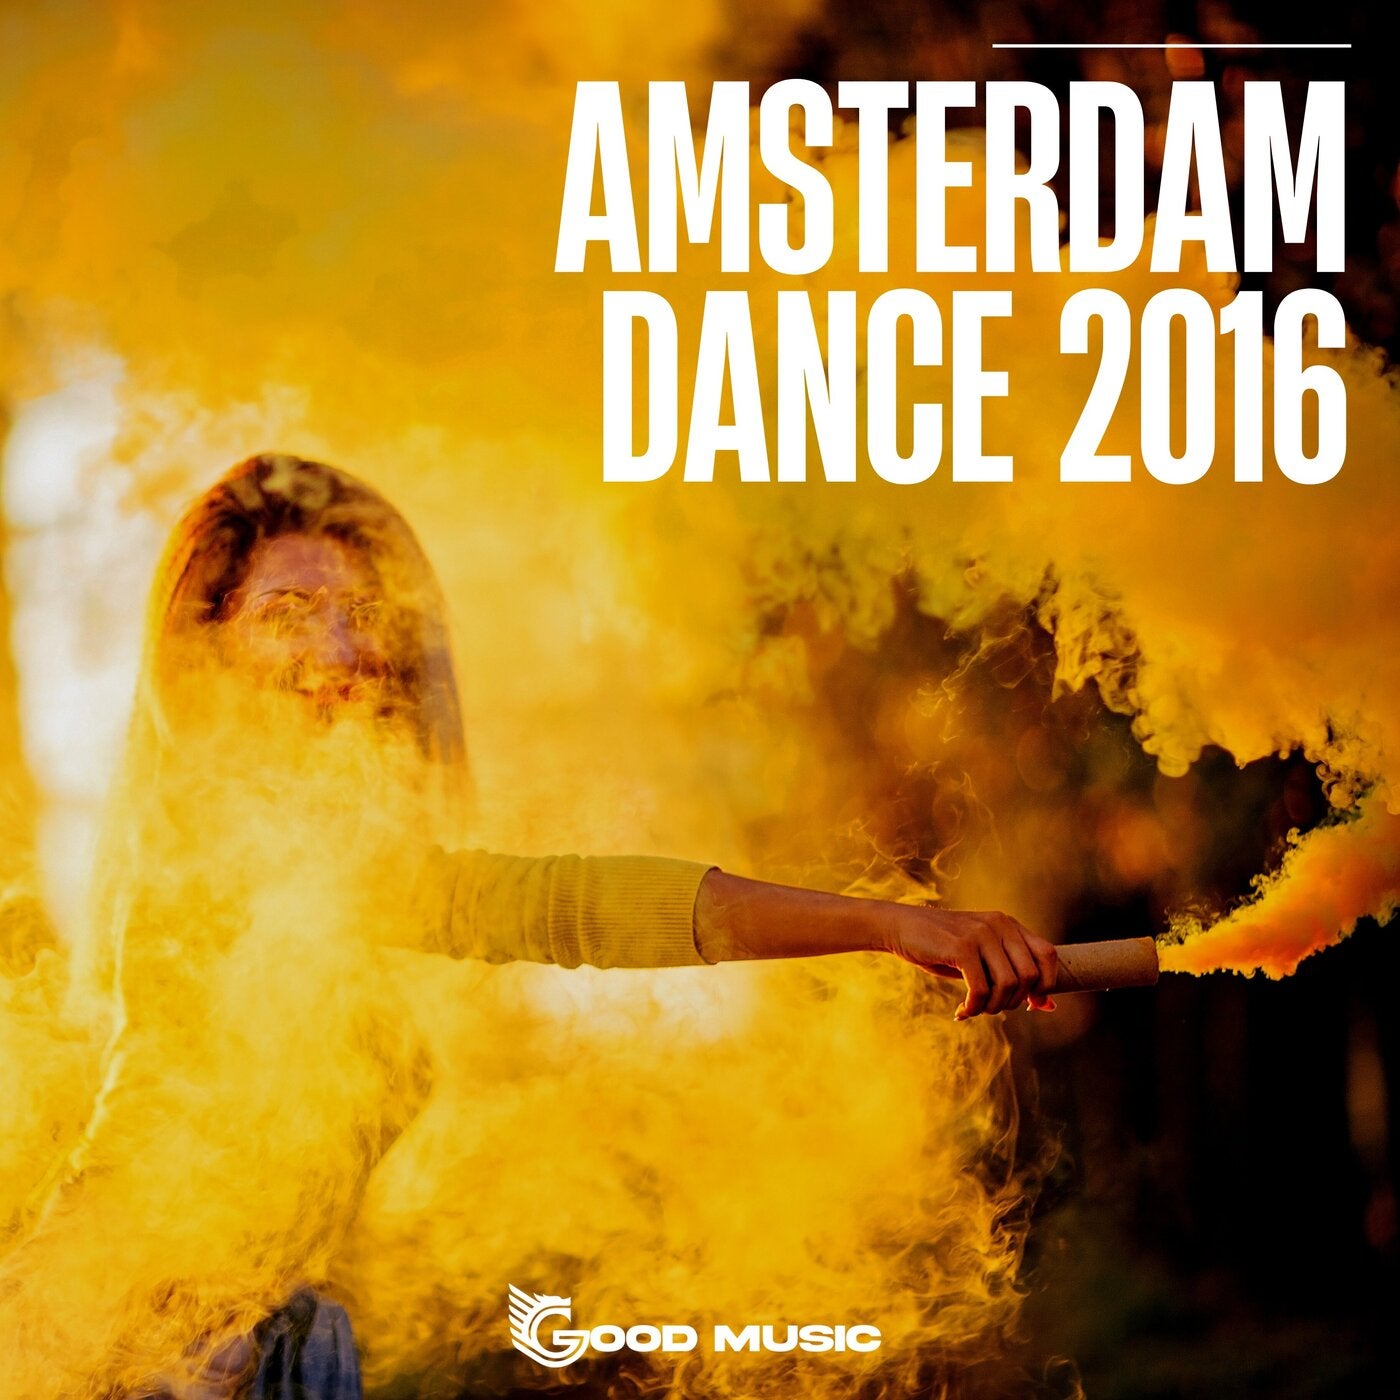 AMSTERDAM DANCE 2016